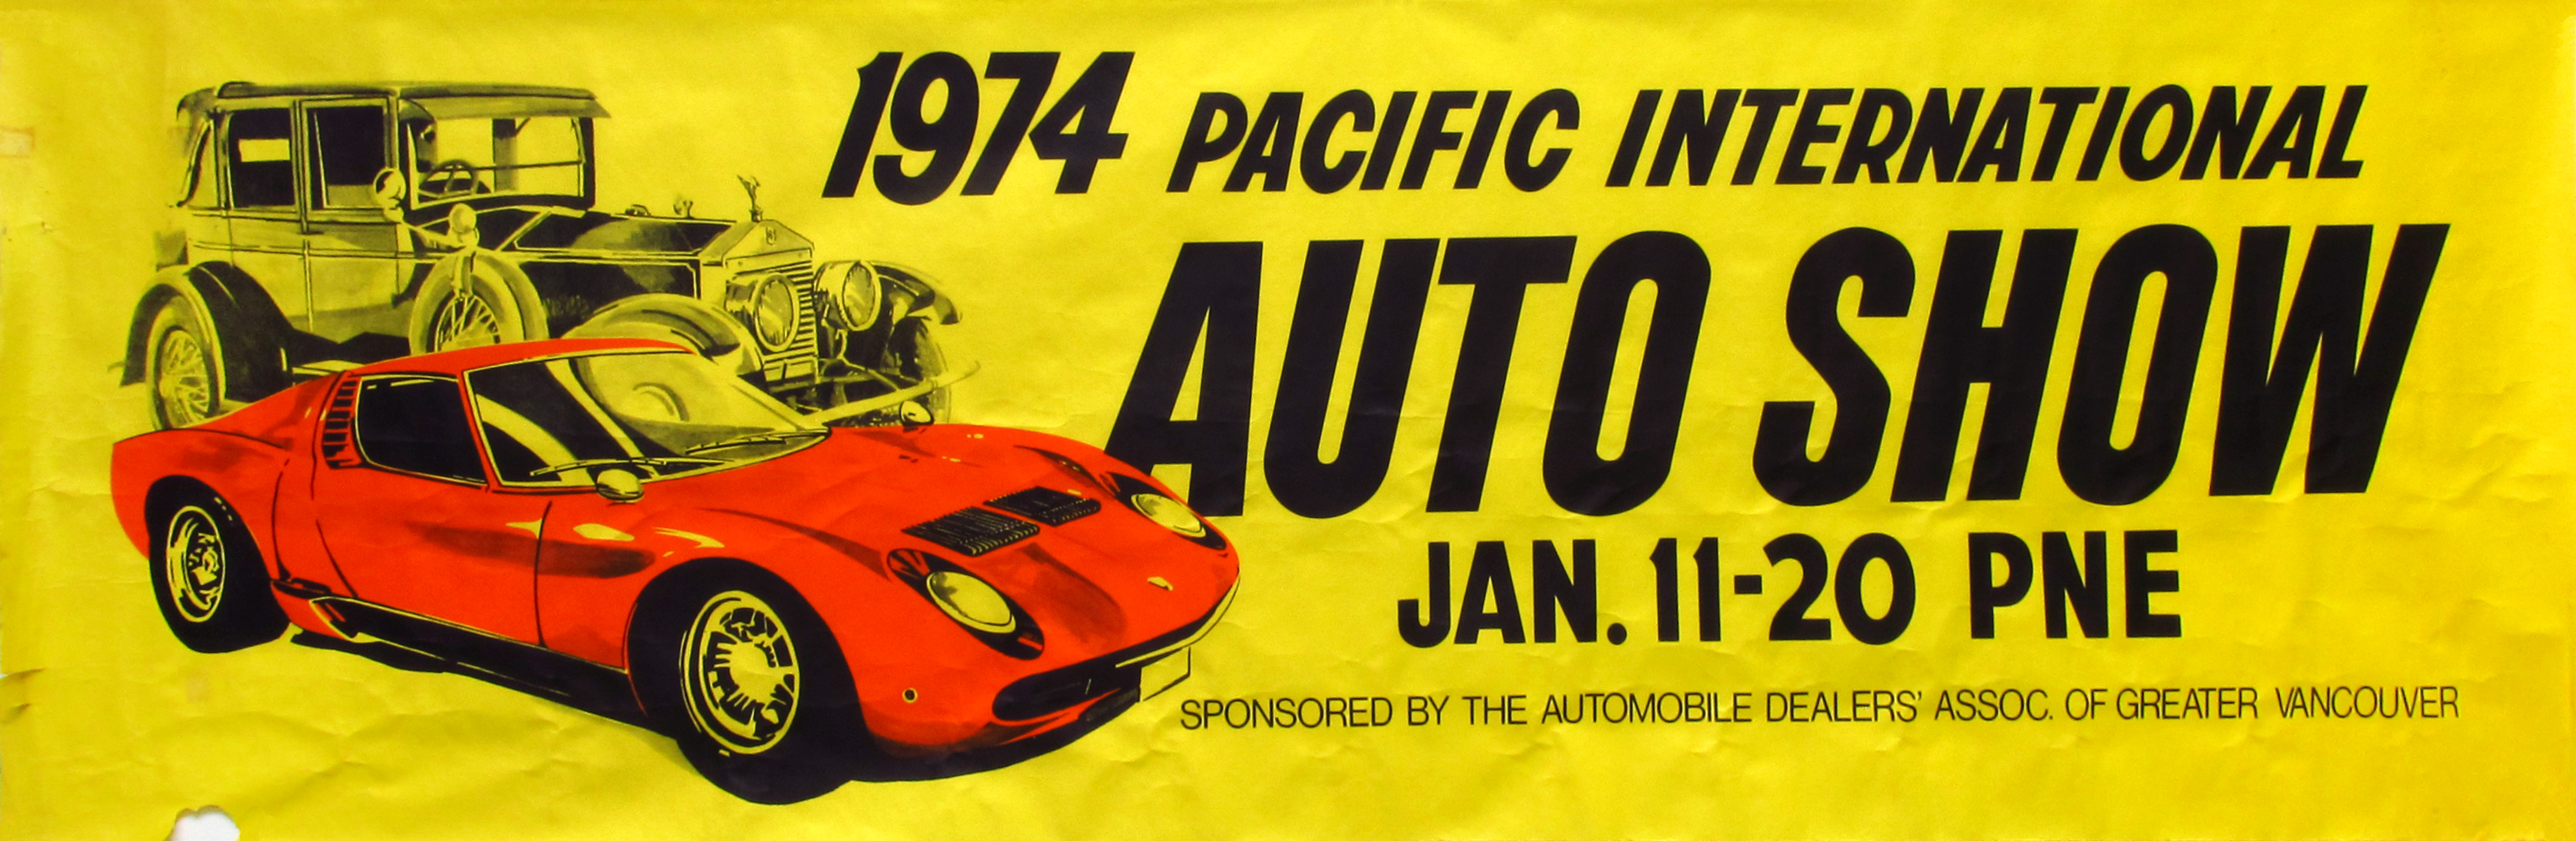 1974 Pacific International